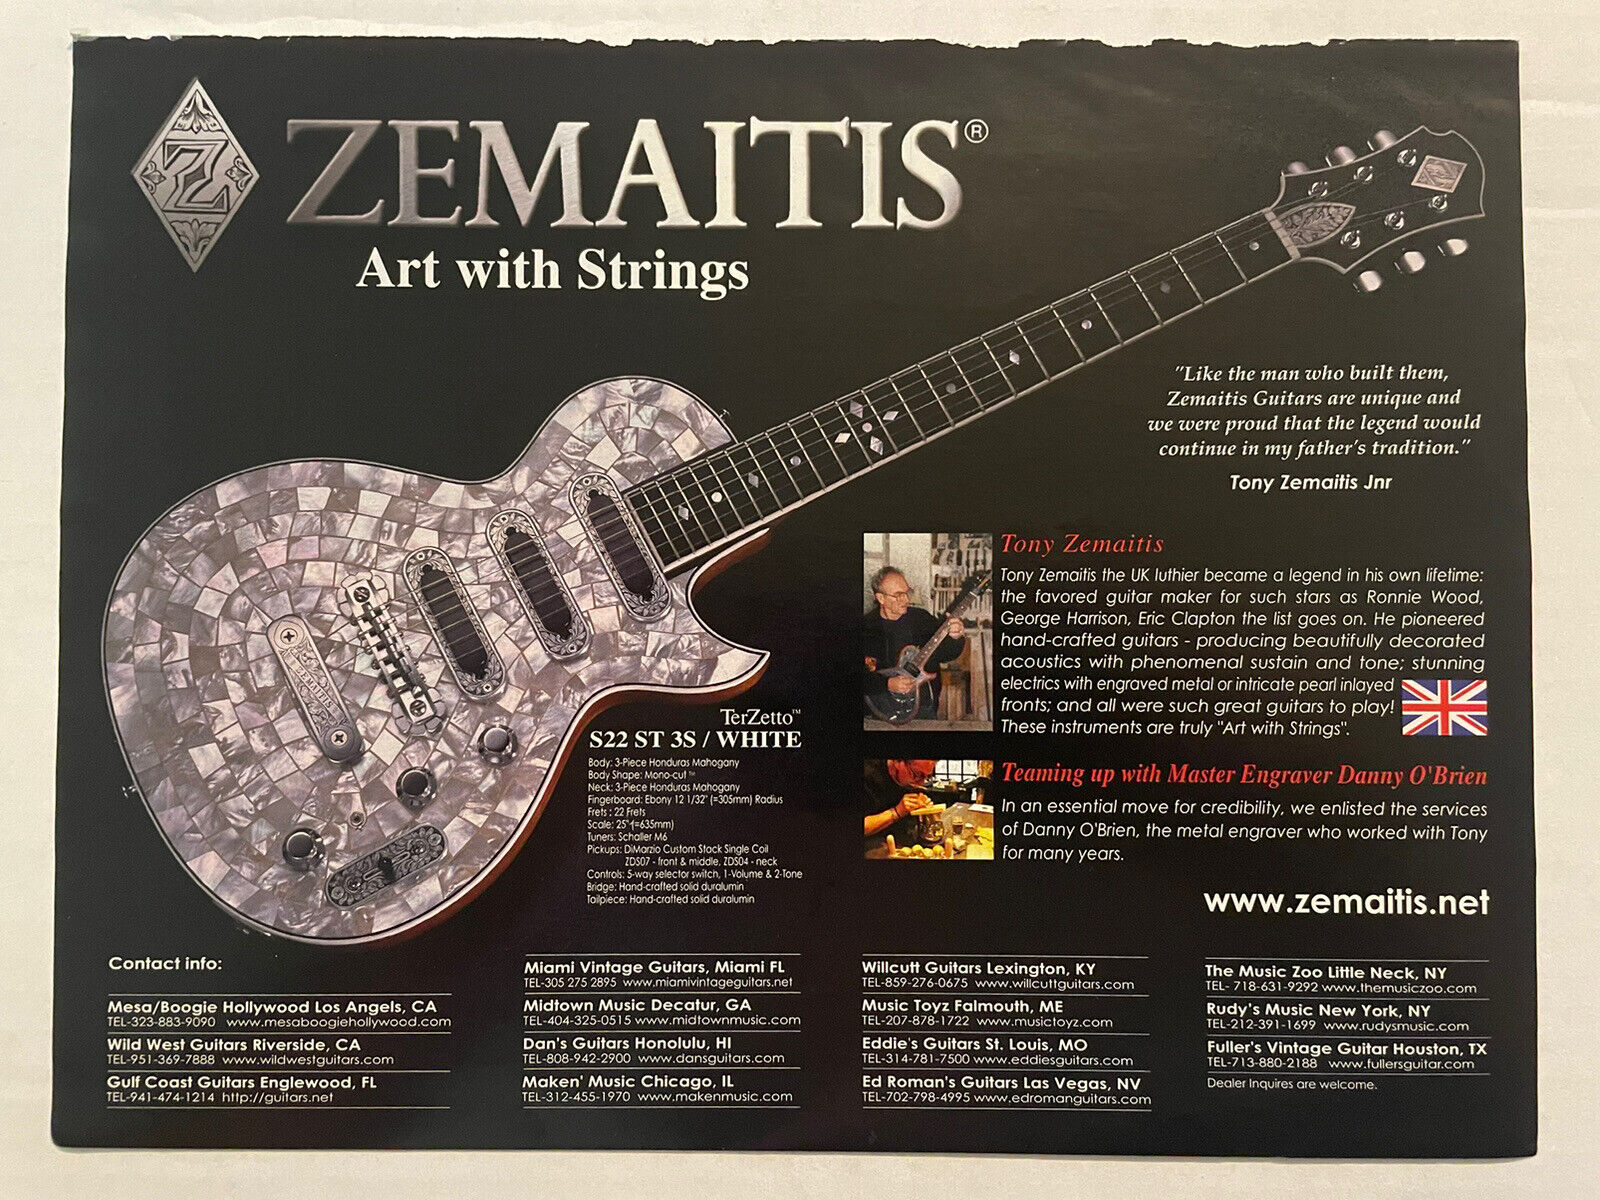 Tony Zemaitis Guitars Magazine Print Ad Art with Strings TerZetto S22 ST 3S